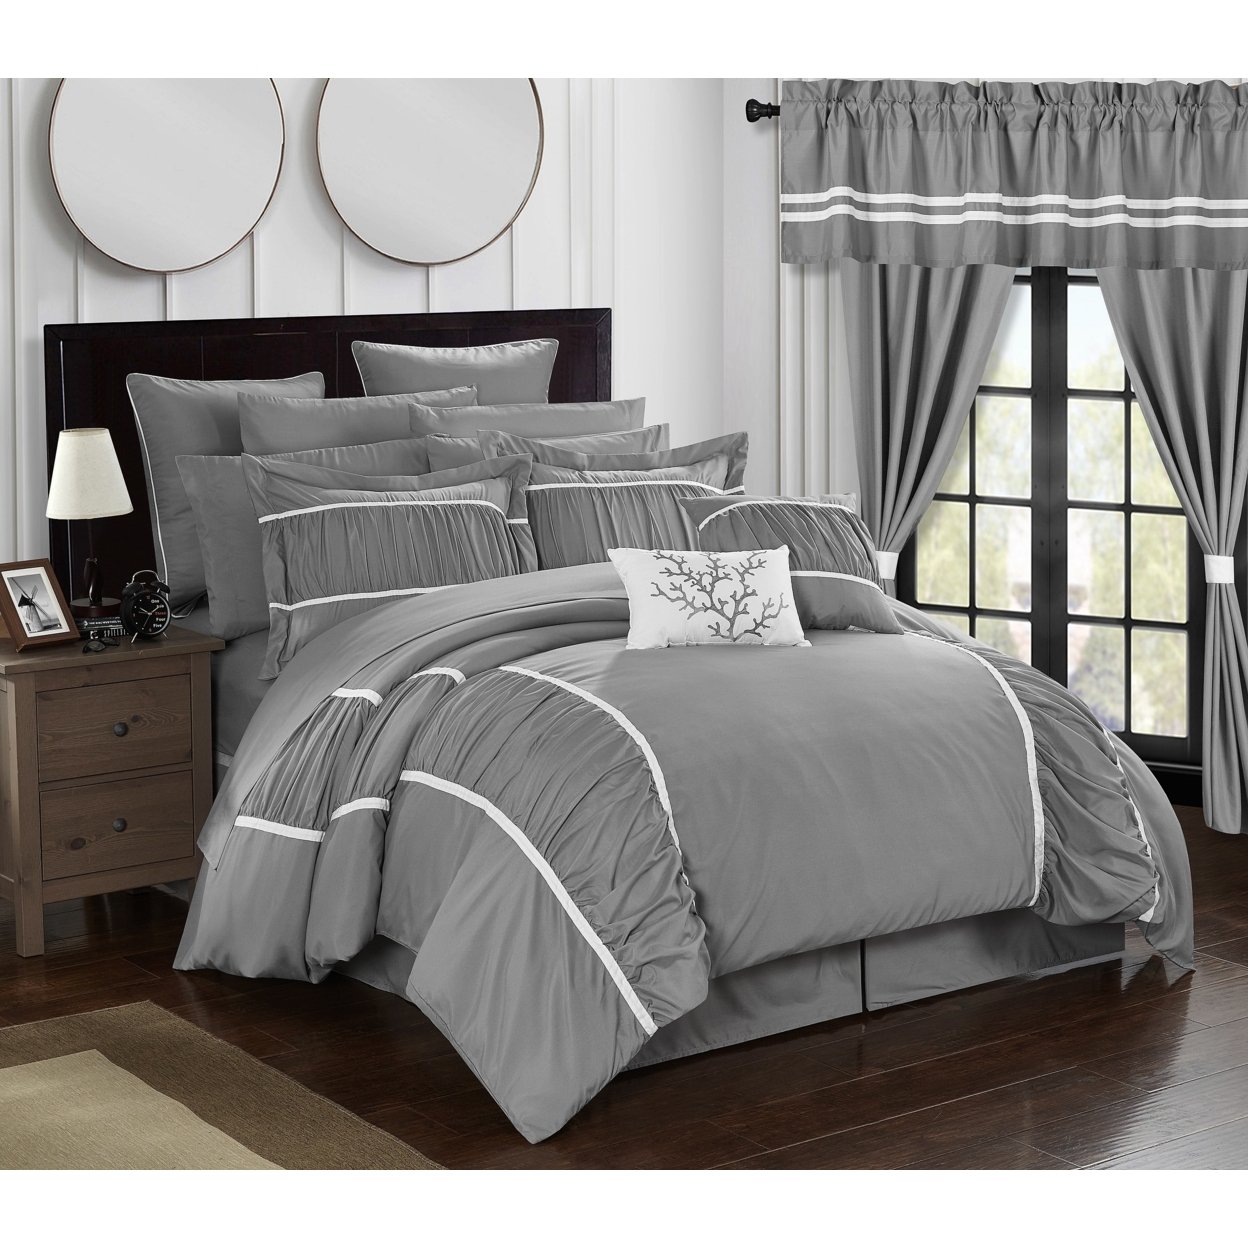 24 Piece Marian Complete Bedroom In A Bag Pinch Pleat Ruffled Designer Embellished Bed In A Bag Comforter Set - Grey, Queen